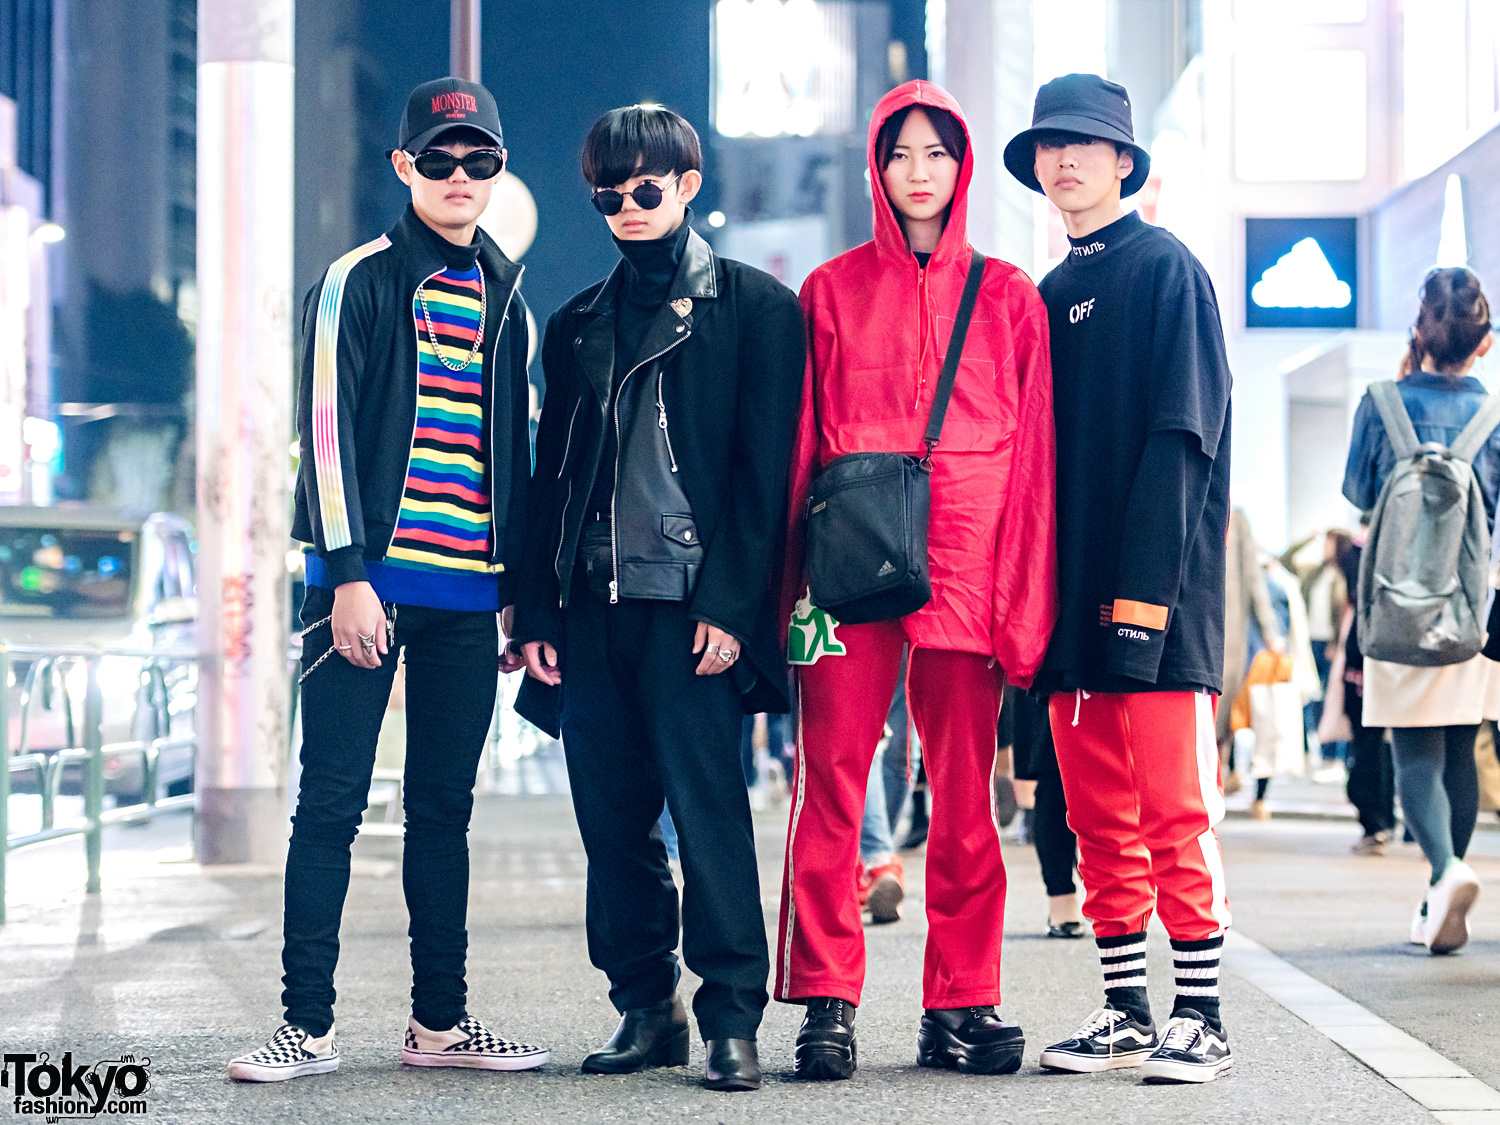 Harajuku Teen Group in Modern Japanese Streetwear Fashion